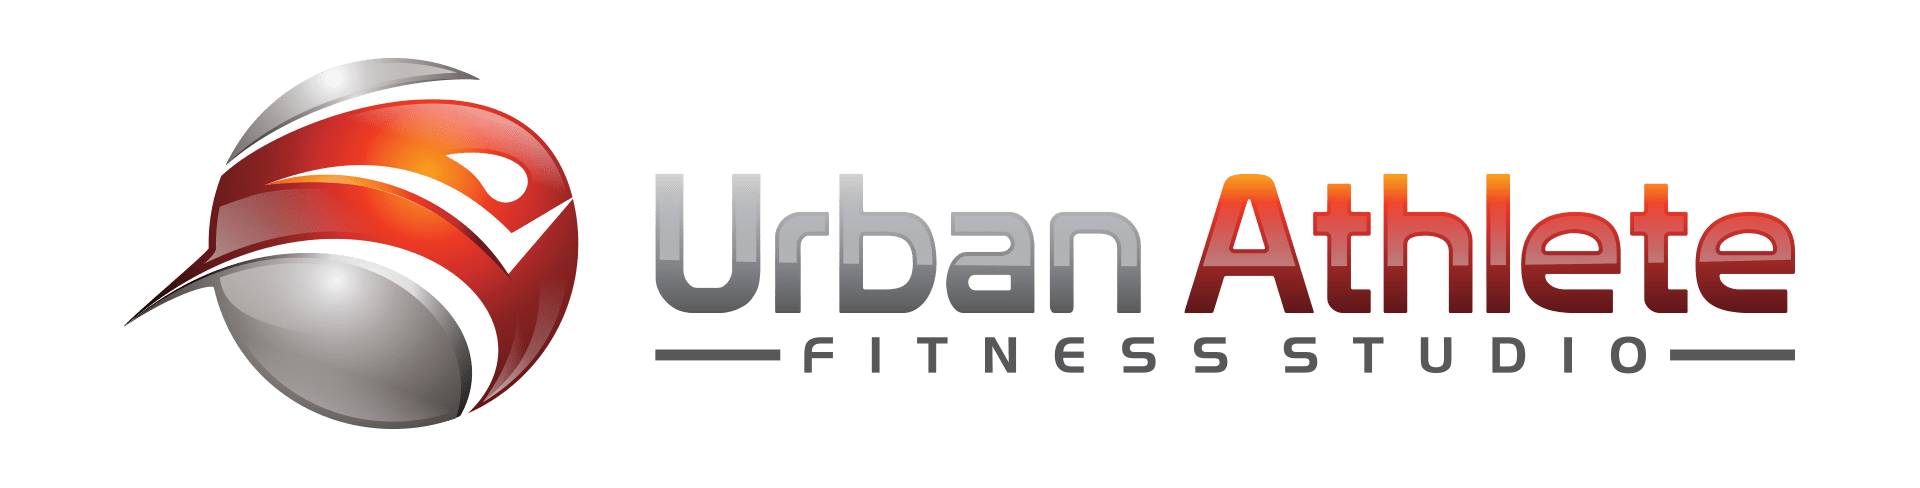 Urban Athlete Fitness Studio - Best Calgary Gym & Fitness Centre